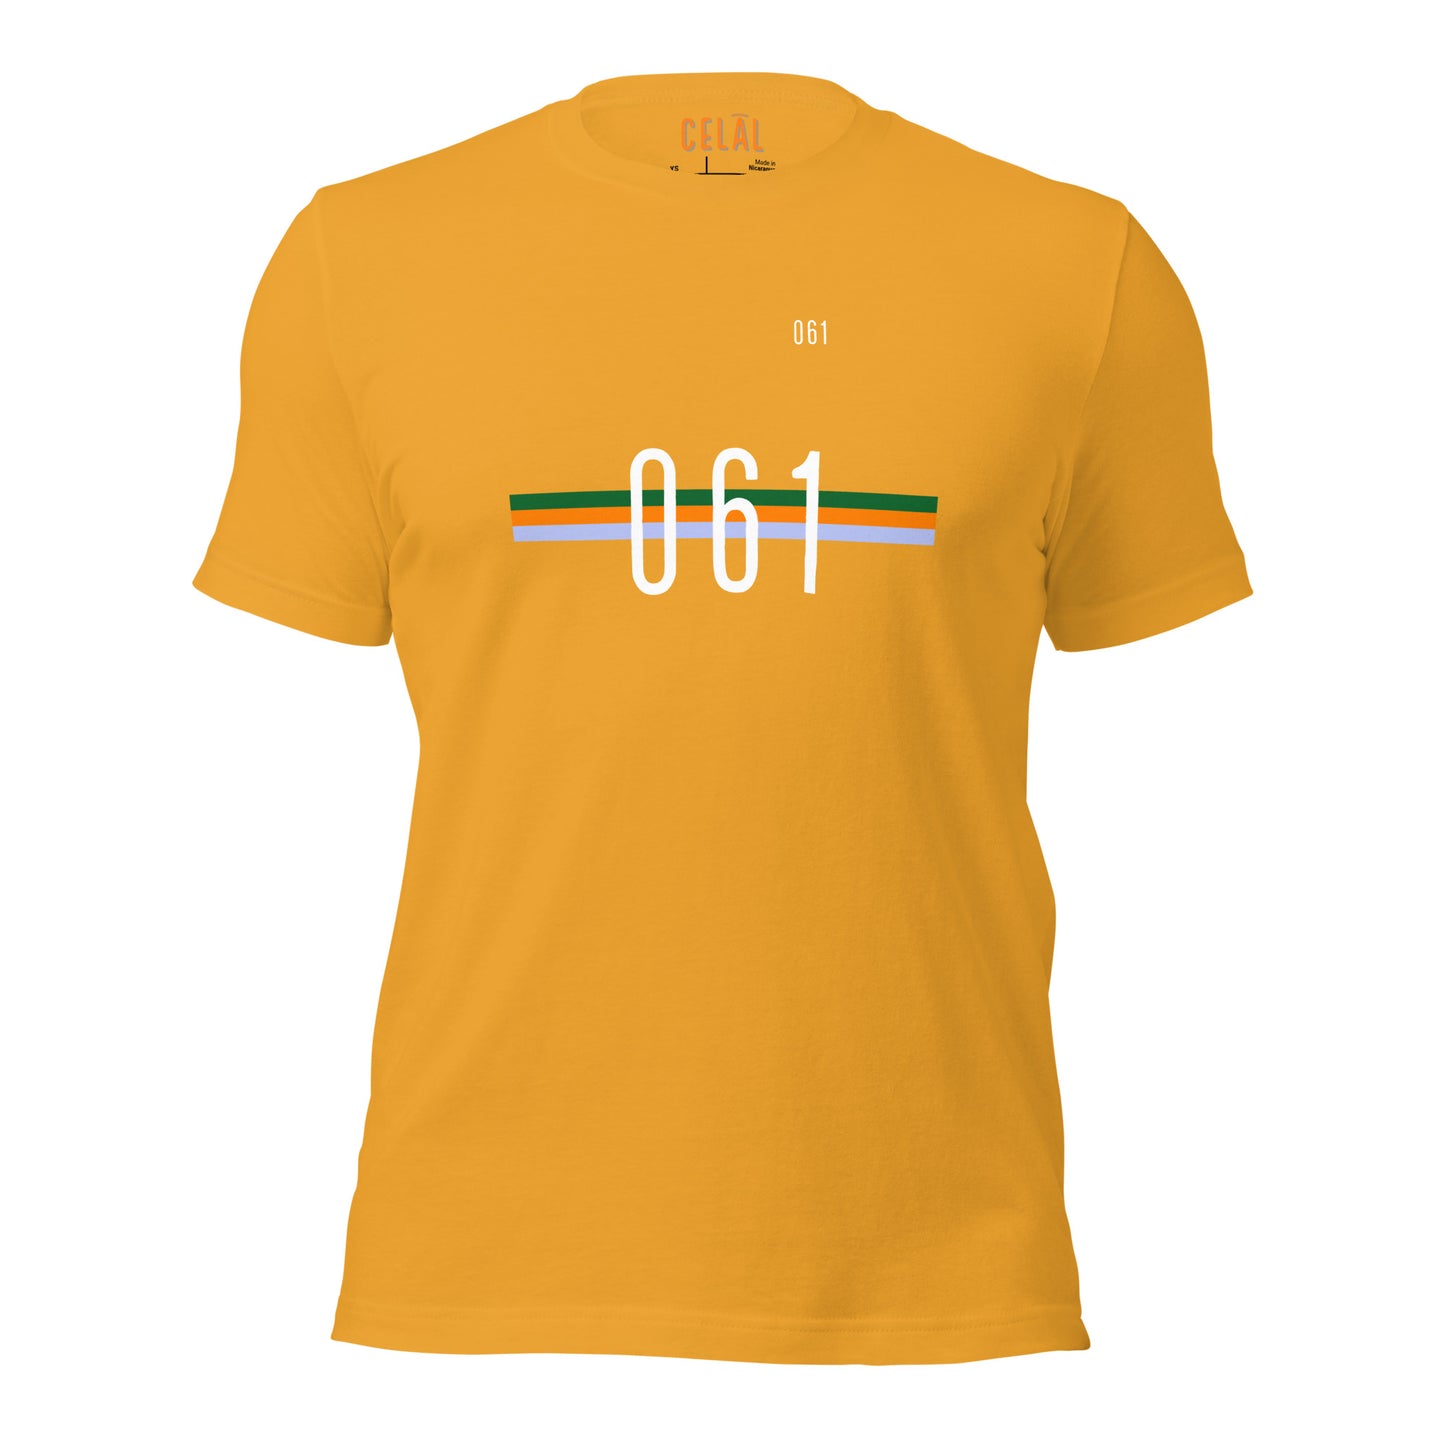 061 Unisex t-shirt